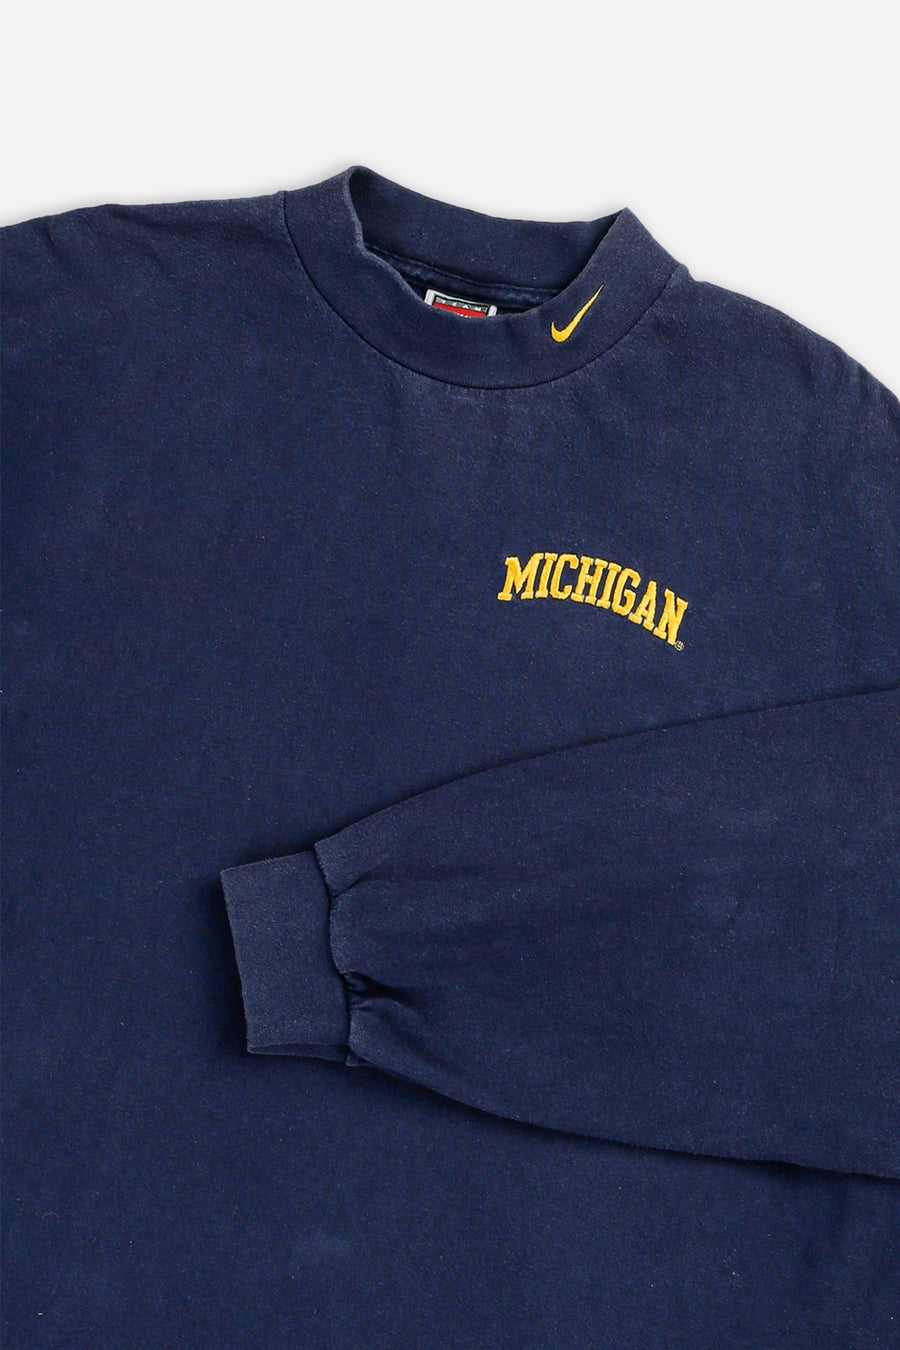 Vintage Michigan Nike Long Sleeve Tee - XXL